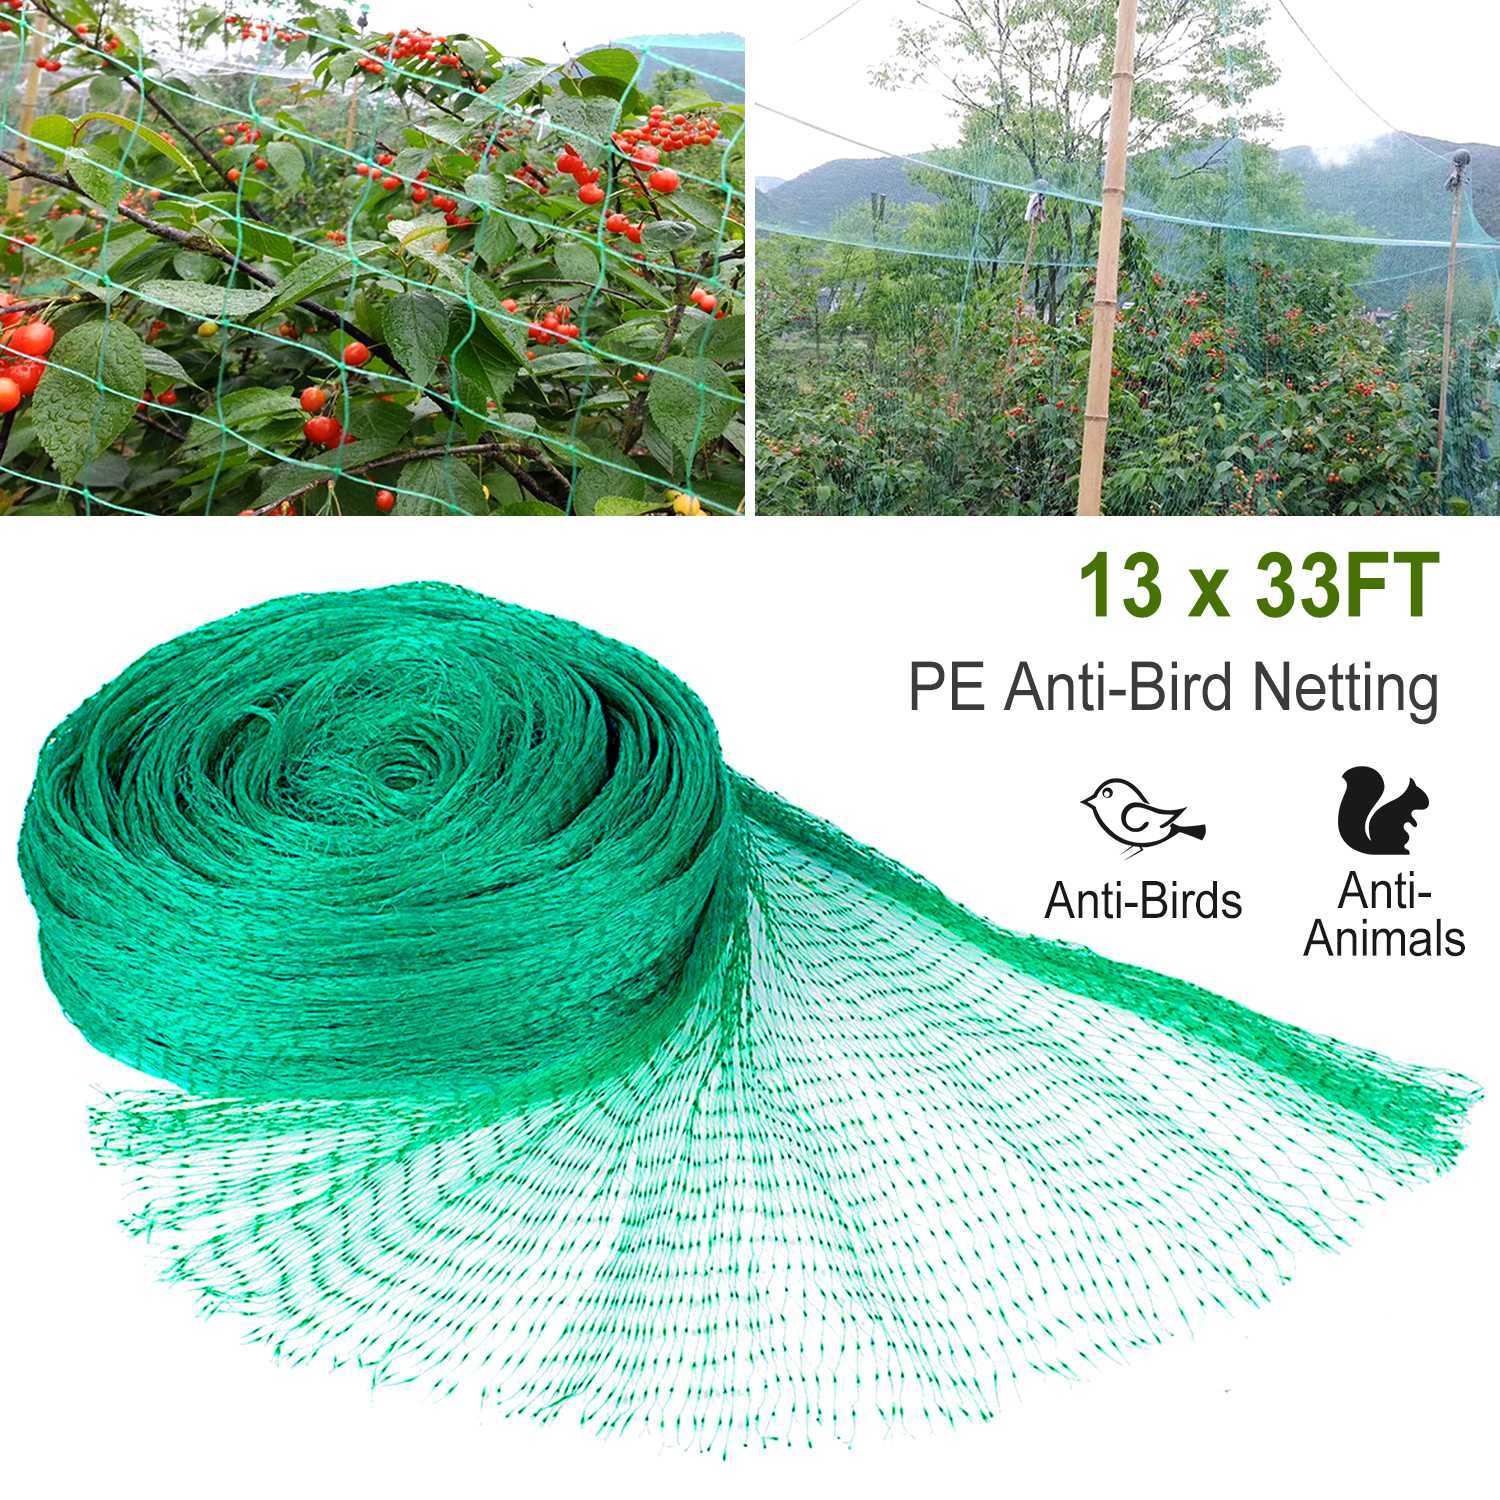 13 x 33ft Garden Netting Heavy Duty PE Anti Bird Netting Plants Fruits Tree Vegetables Protection Netting Net Moorescarts